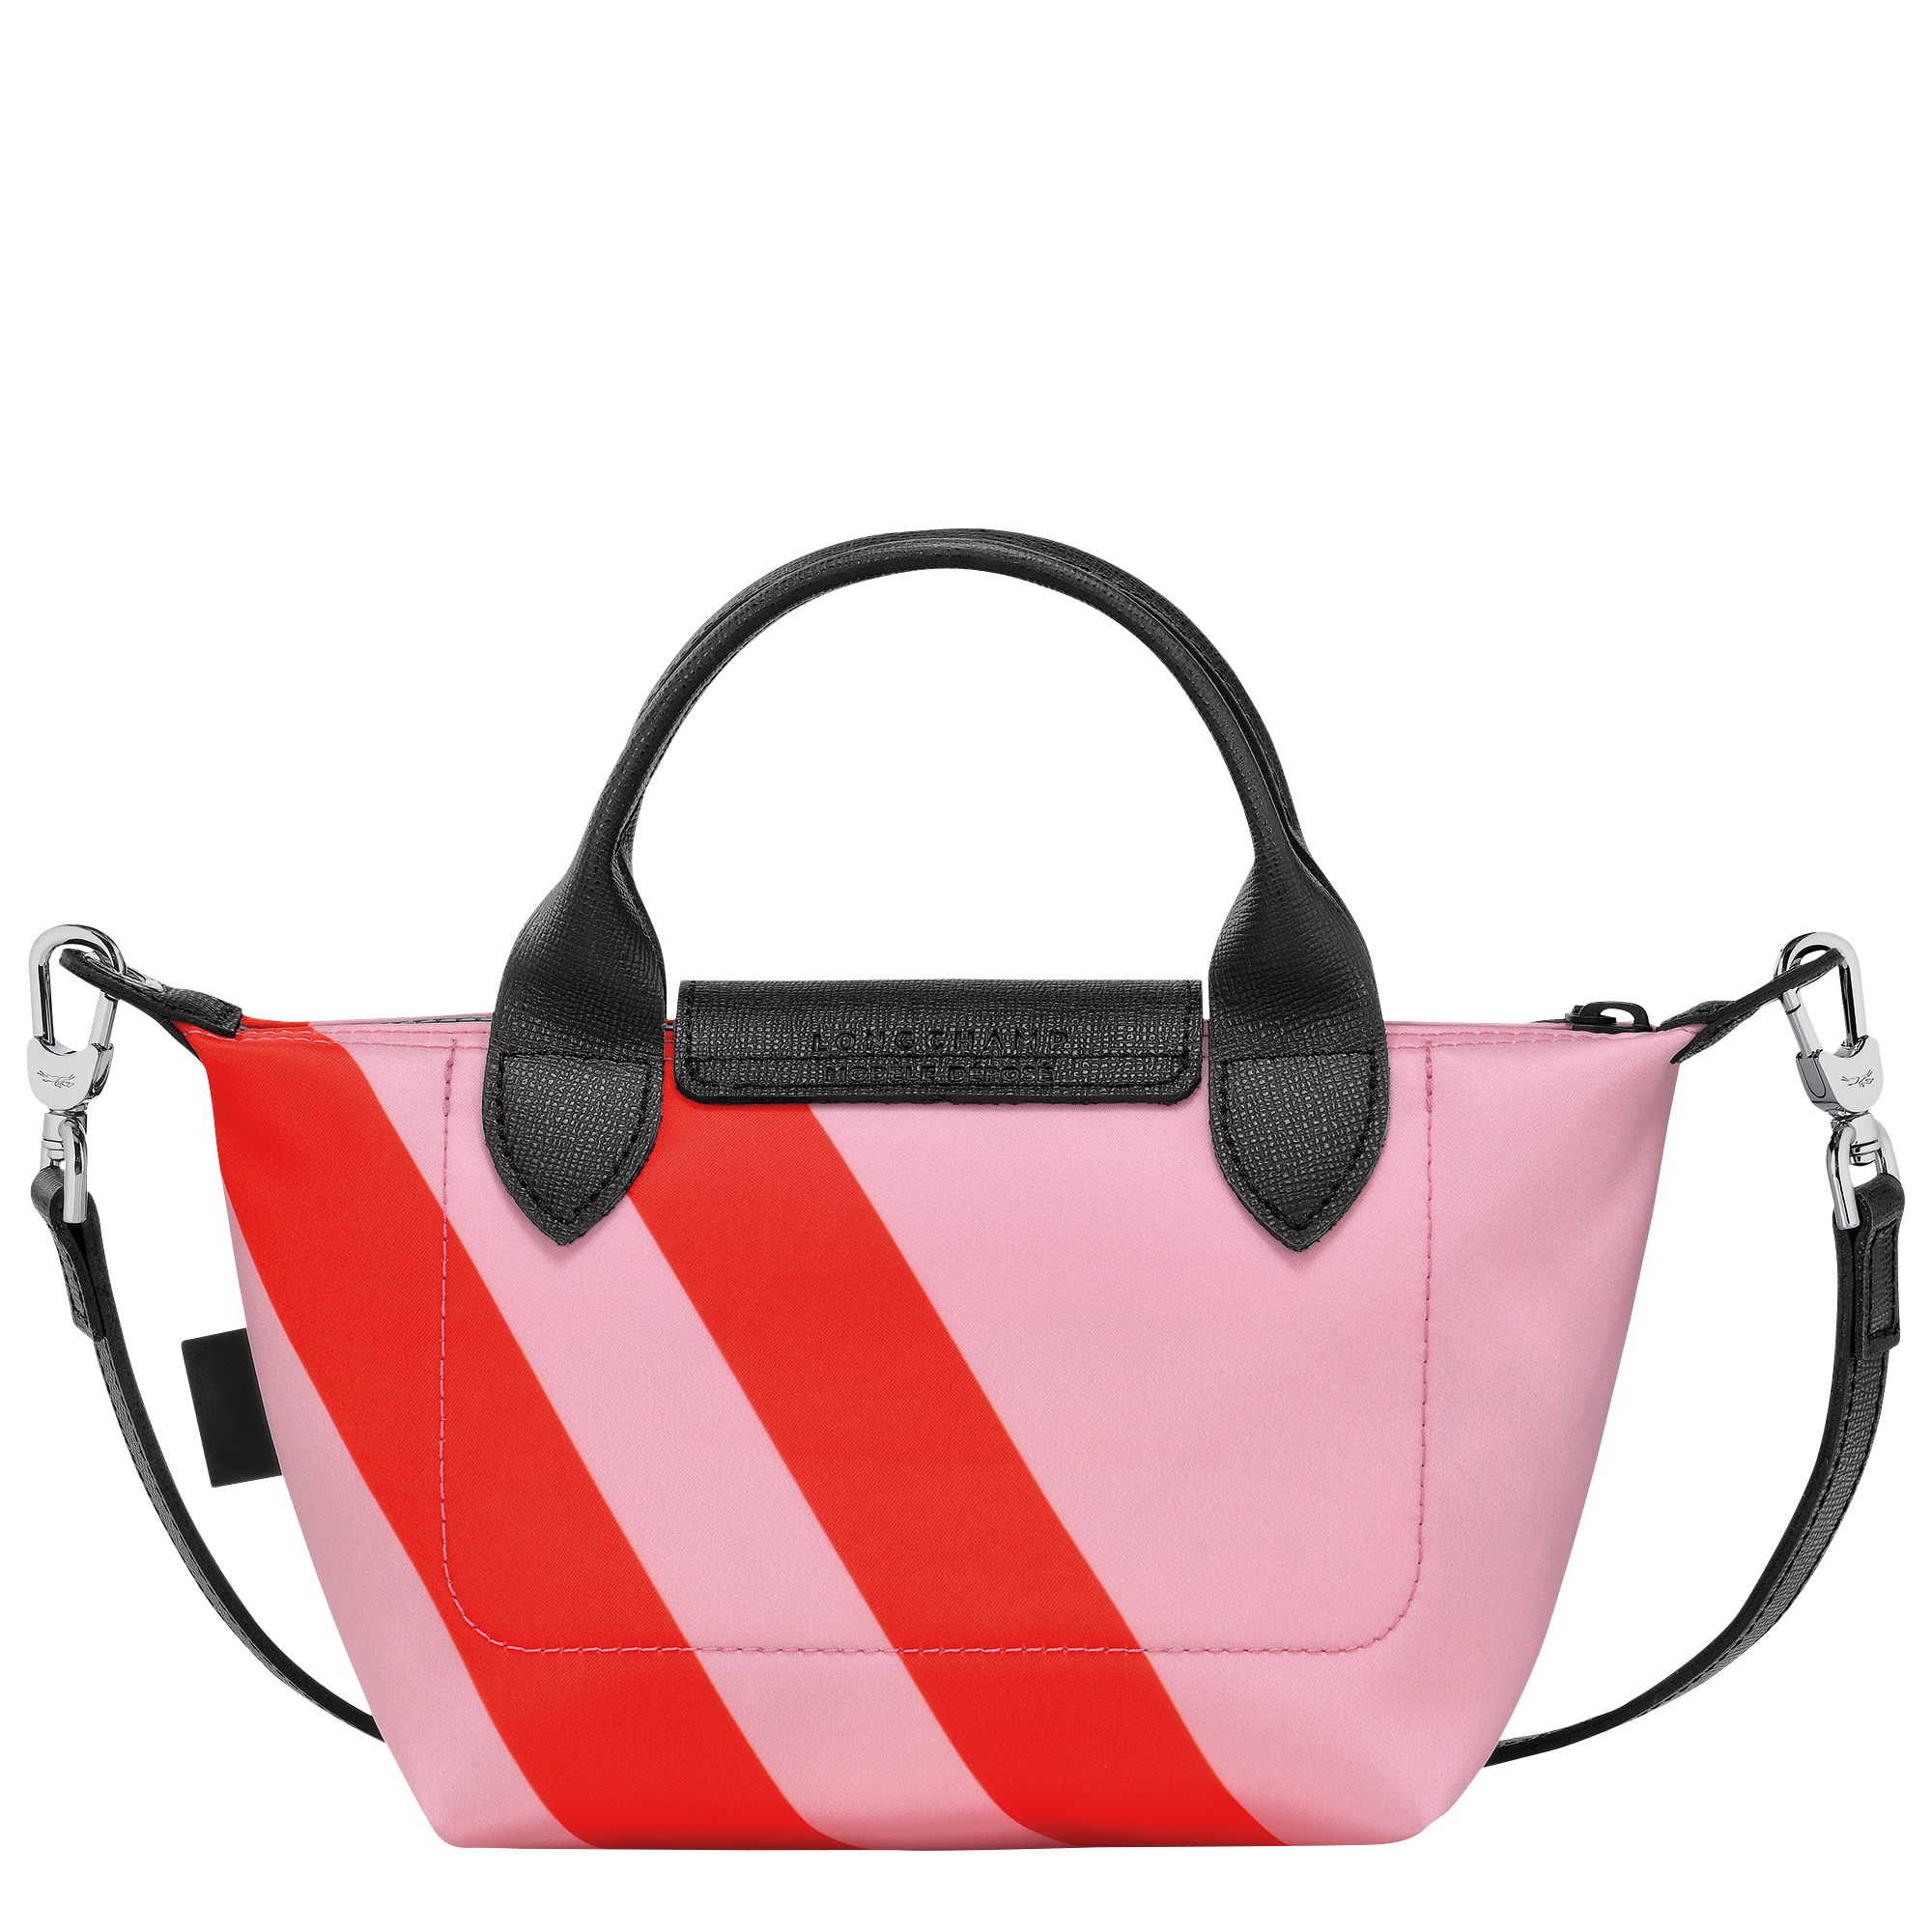 Le Pliage 系列 手提包 XS, 粉紅色 / 橙色